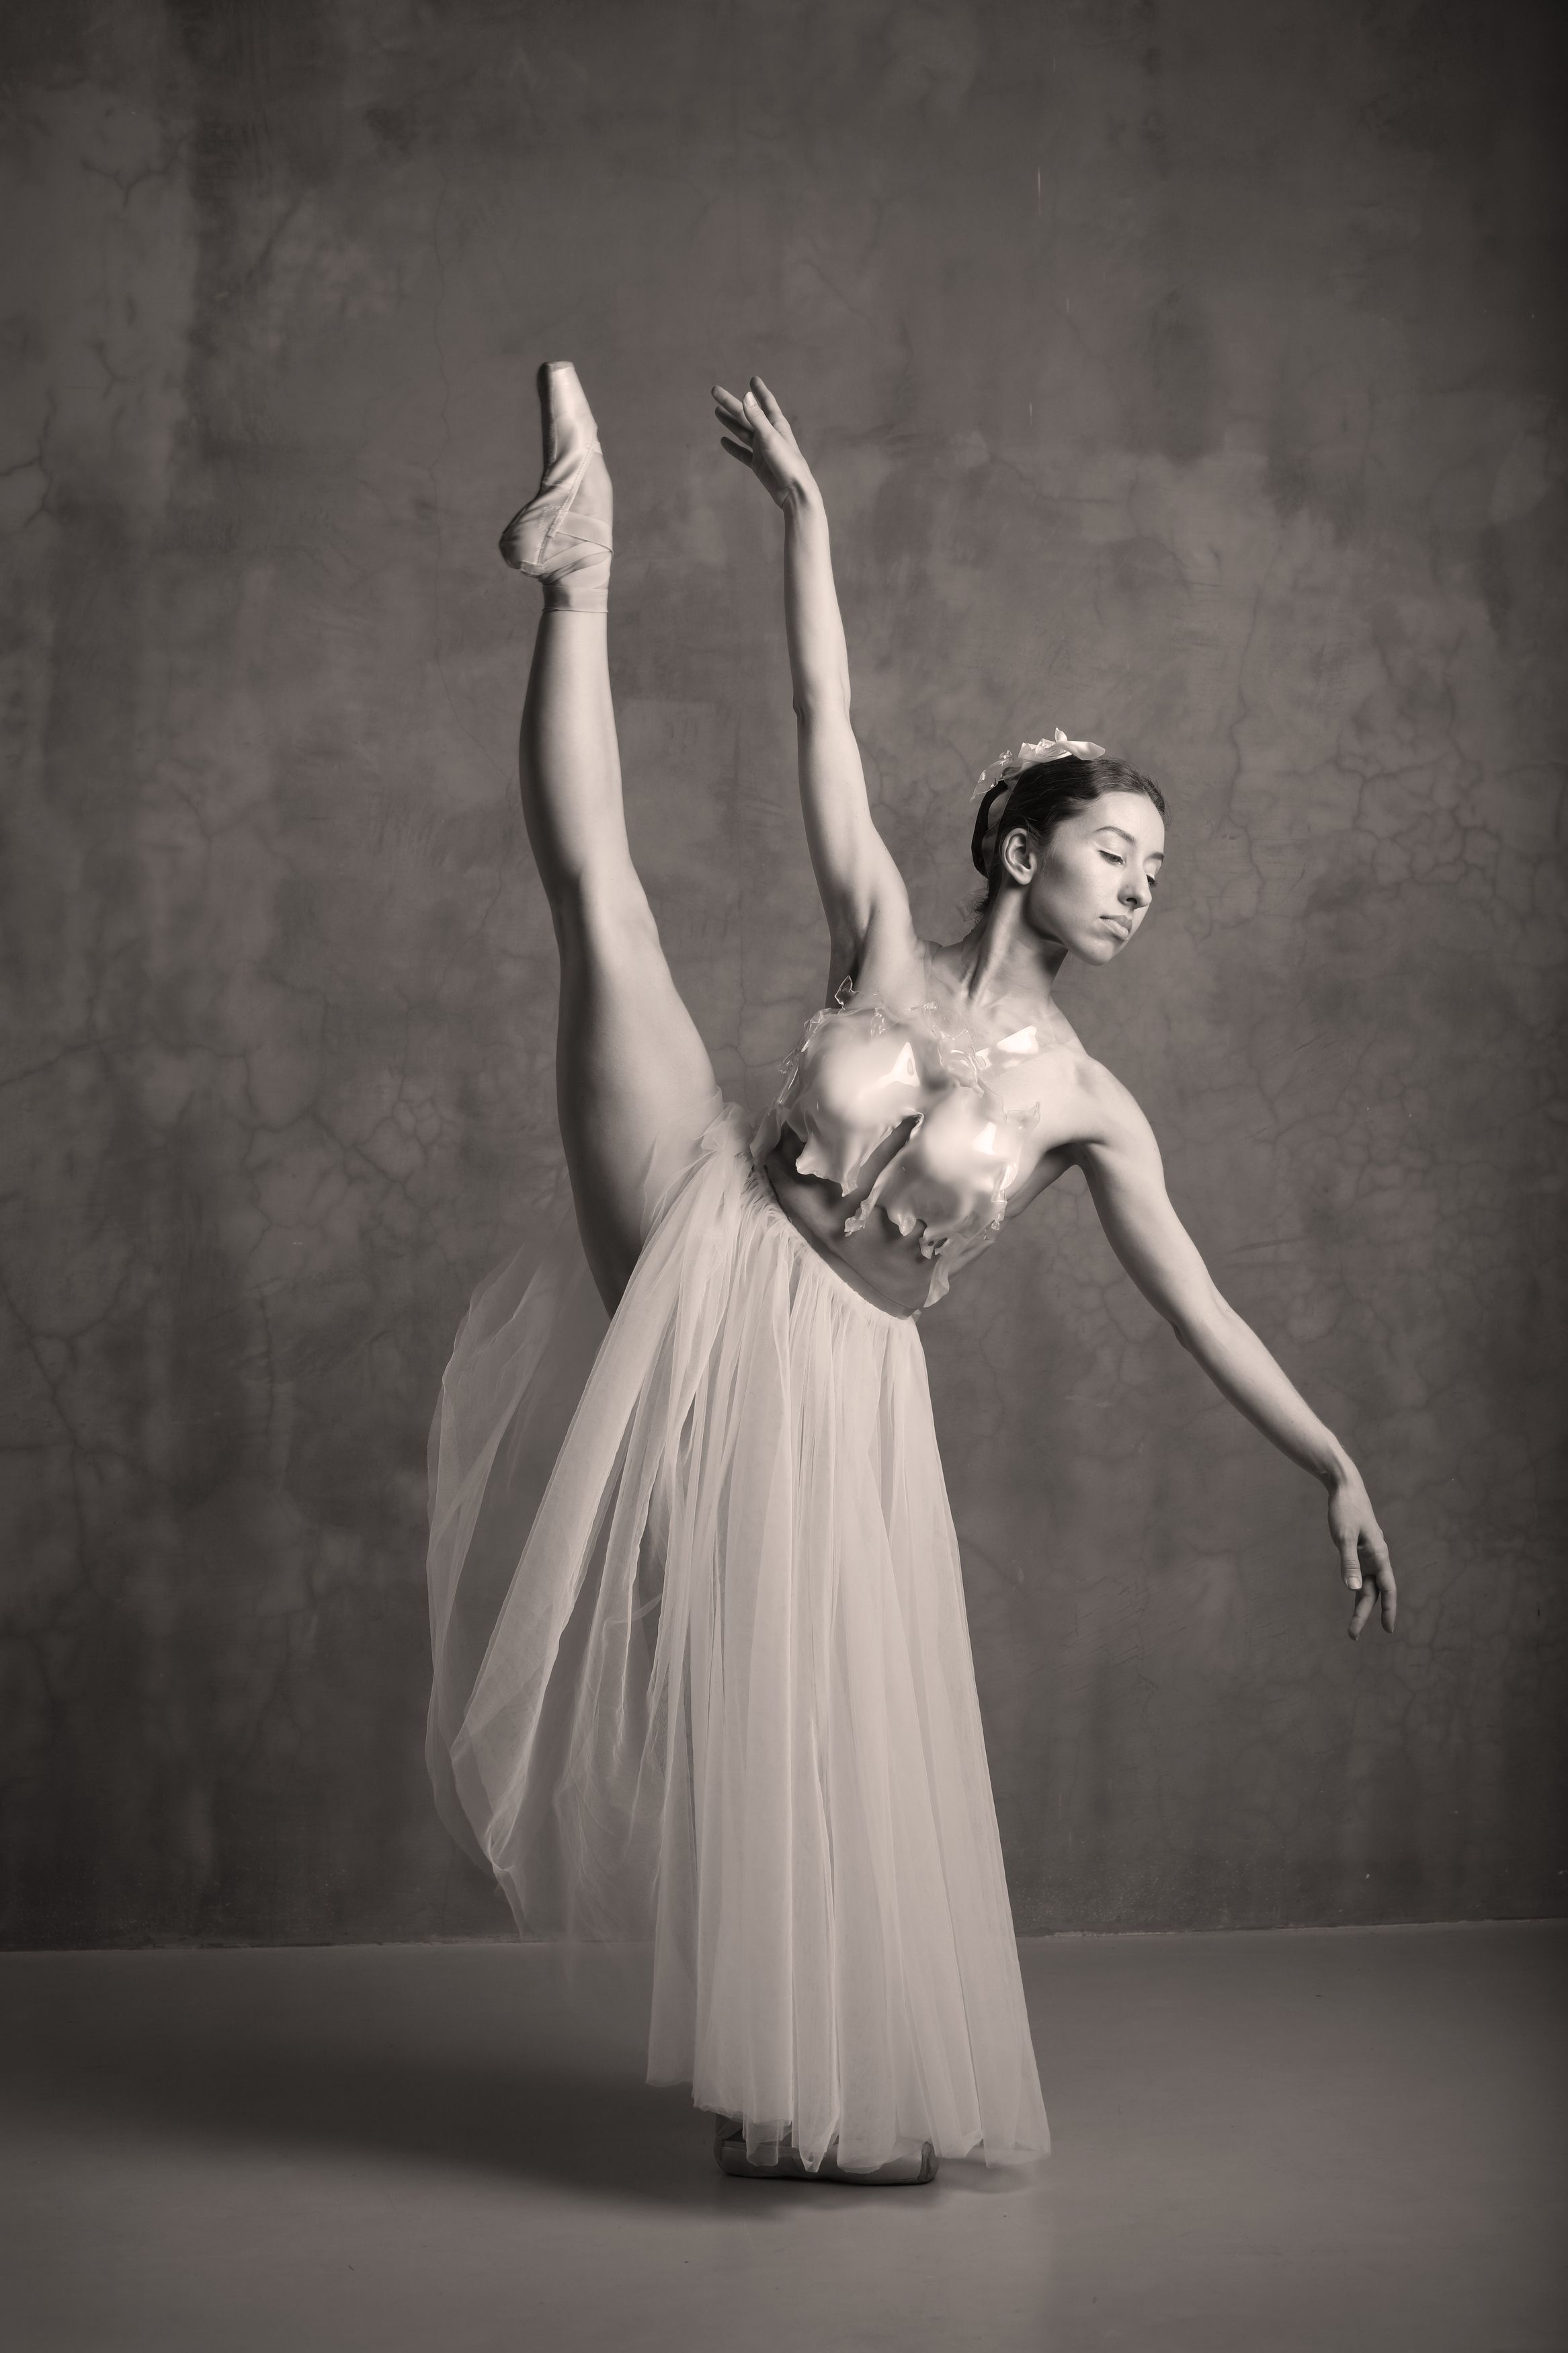 ballet,ballerina,dance,amazing,beauty,woman,female,балет,балерина,танец,красота, движение,женщина,, Олег Грачёв